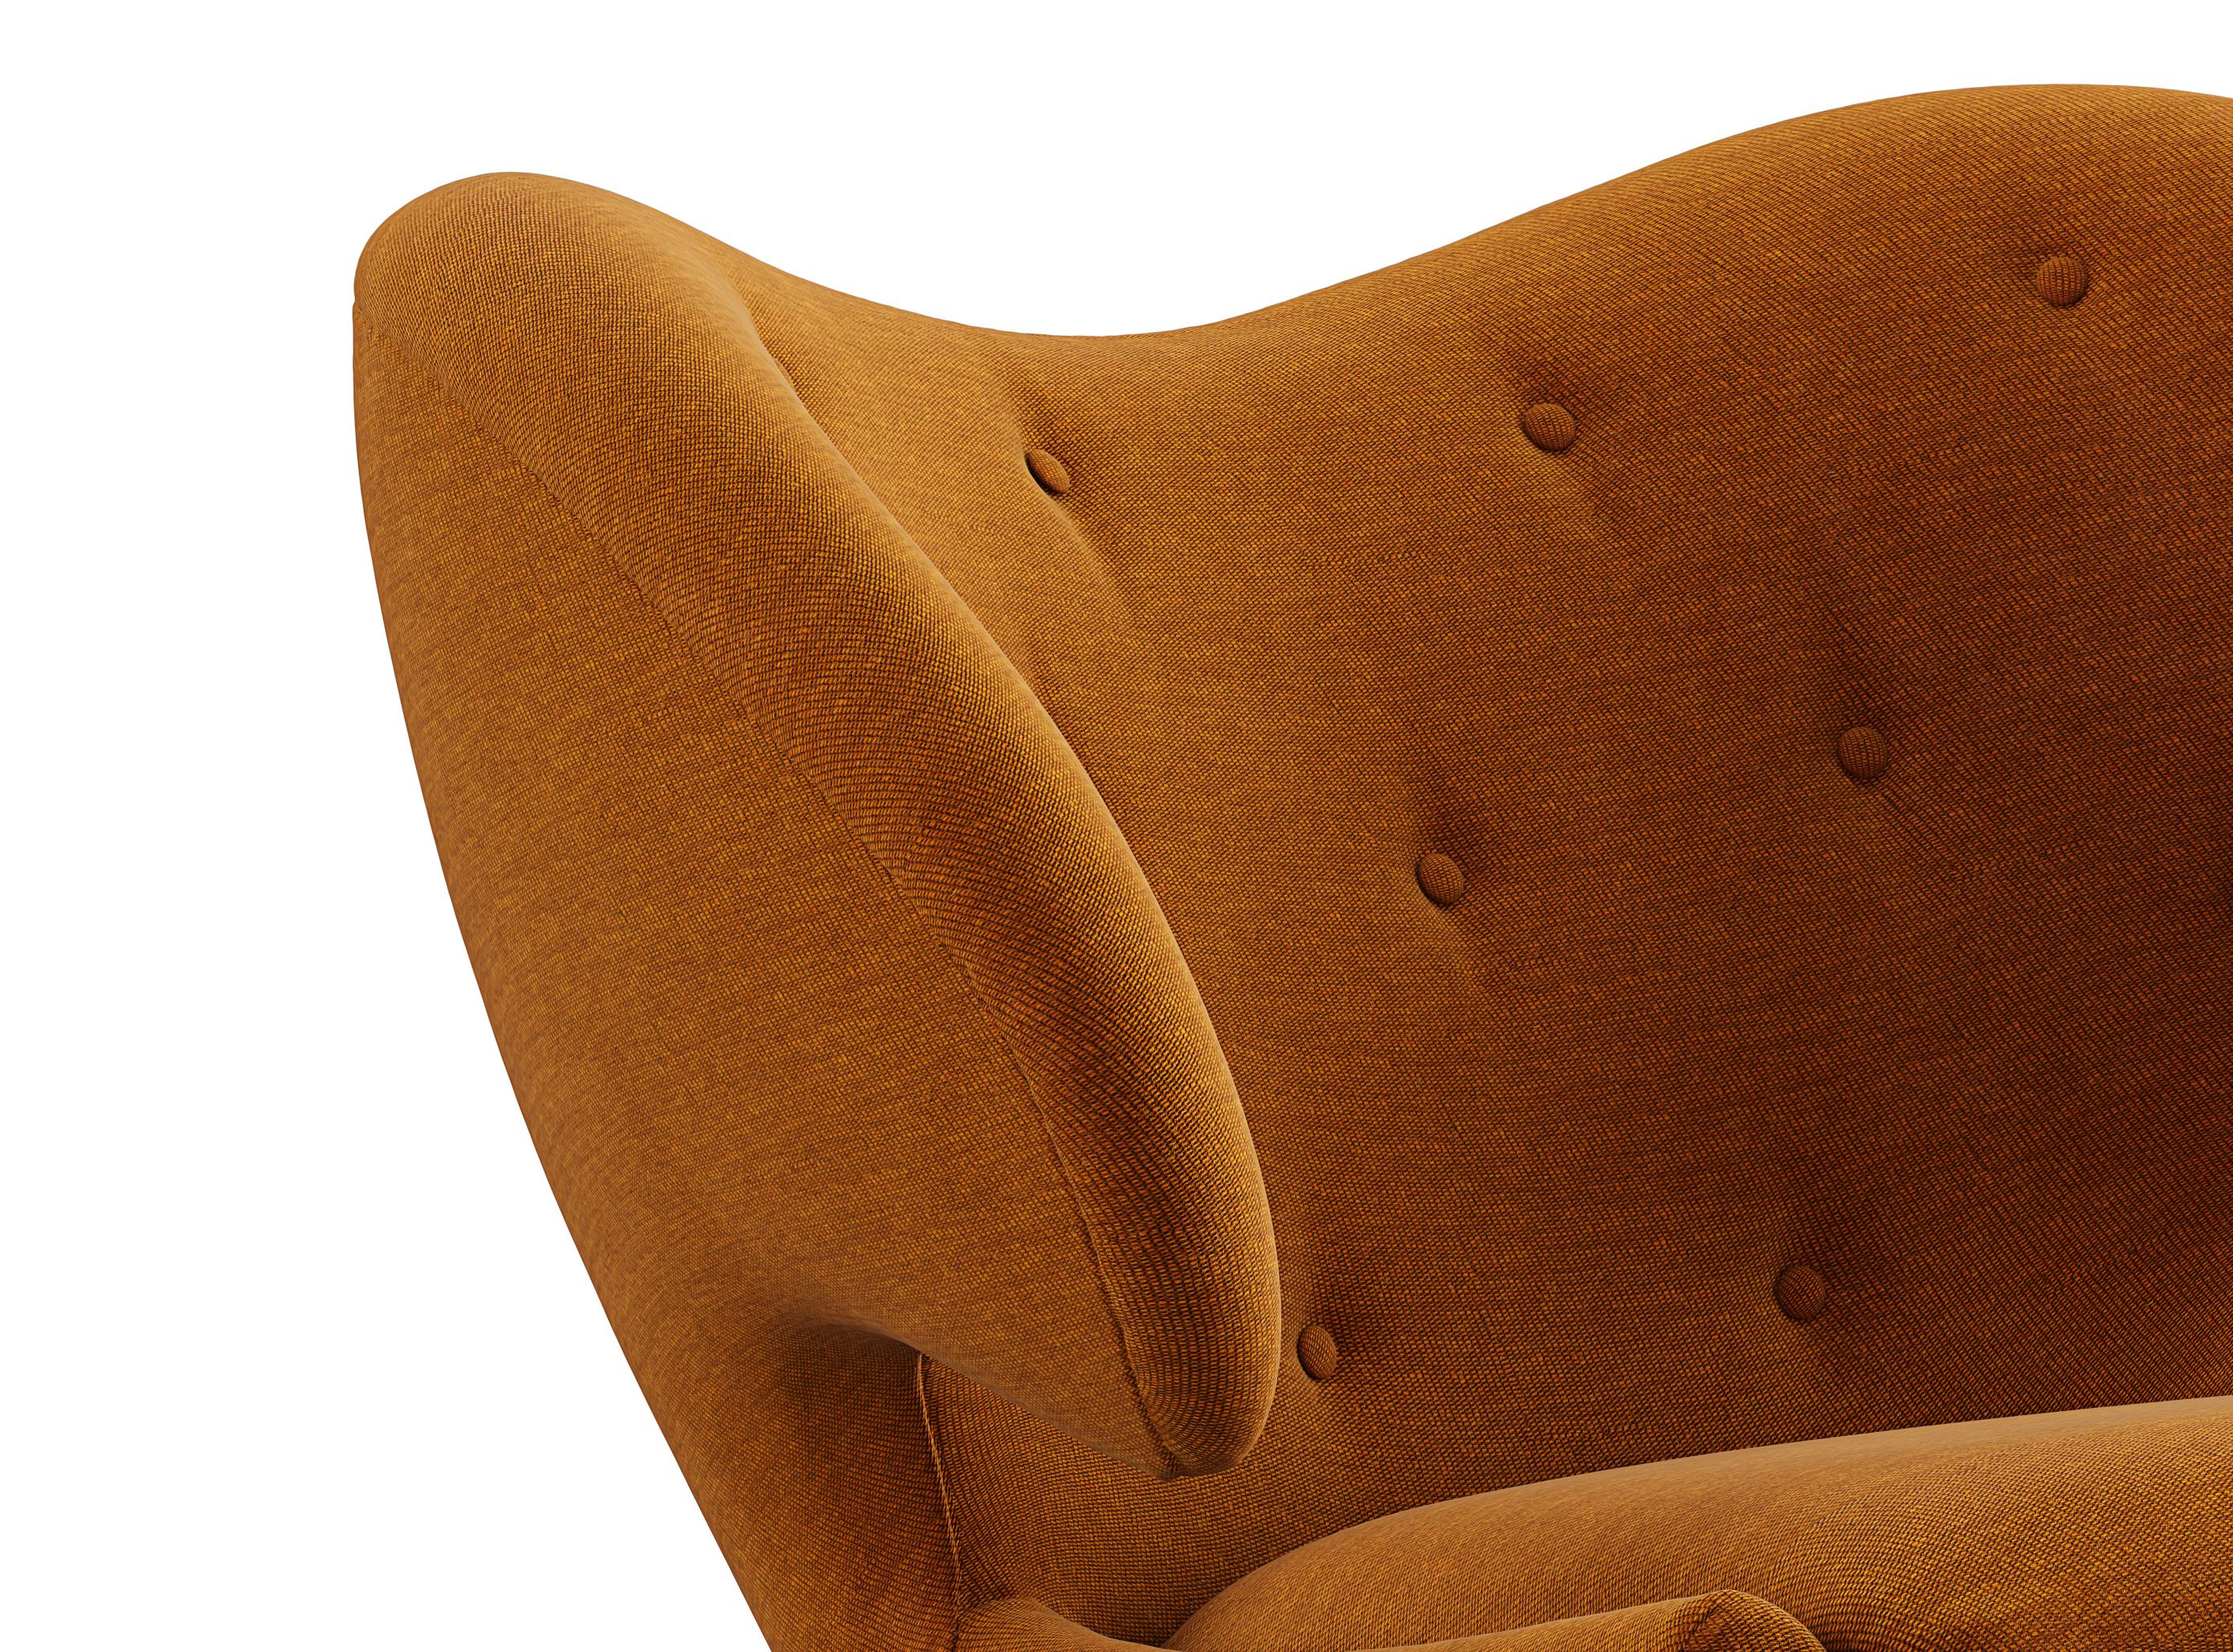 Danish Finn Juhl Pelican Chair Upholstered in Wood and Fabric